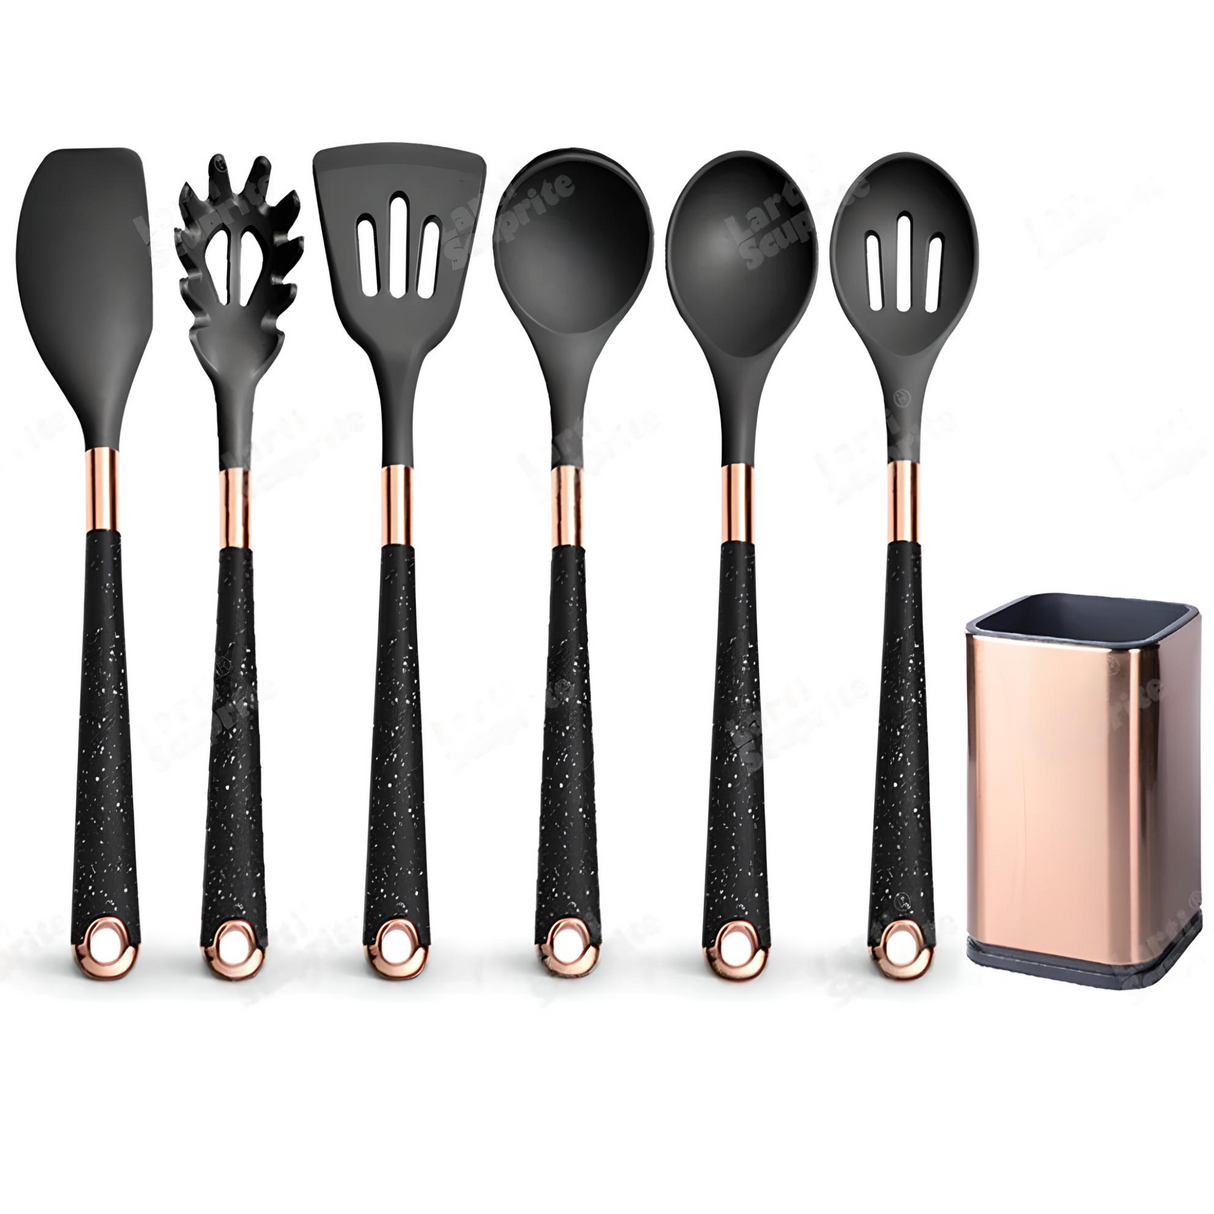 Silicone Kitchen Utensils Set - Heat Resistant, Non-stick, Rose Gold Plated Handles kitchen tools & utensils Julia M Home & Kitchen B06-1  